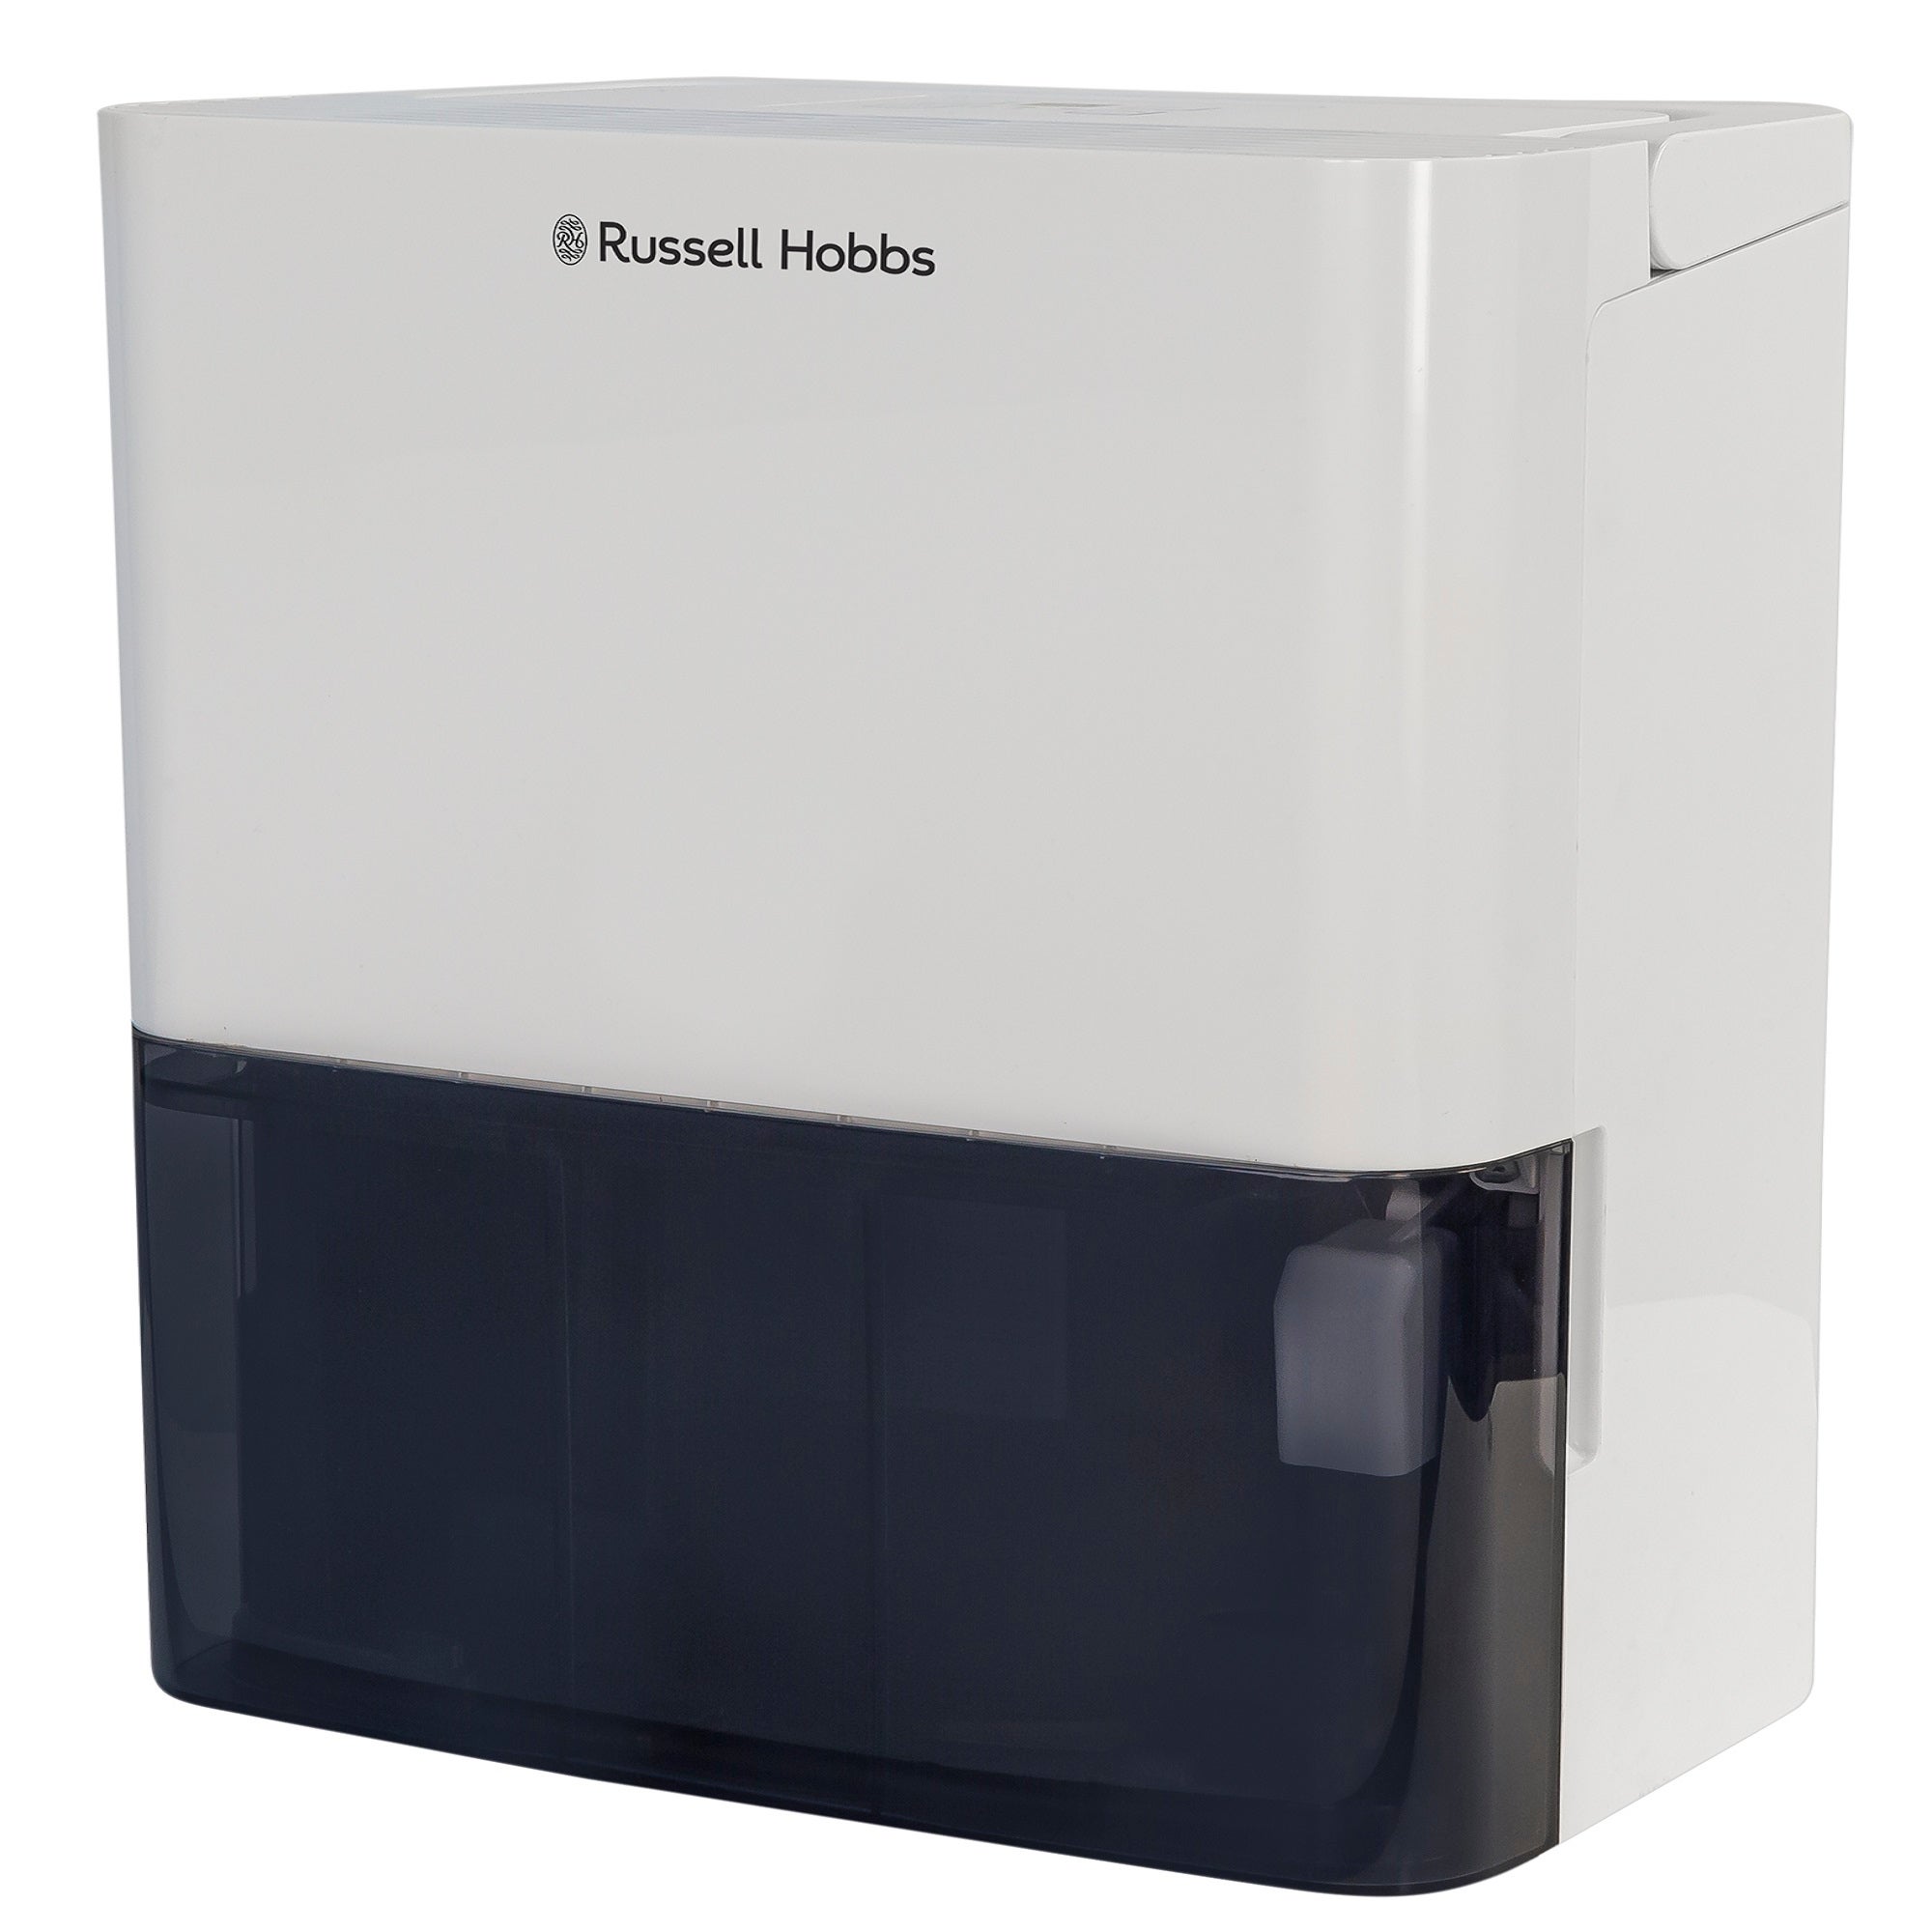 Russell Hobbs 10L Dehumidifier White